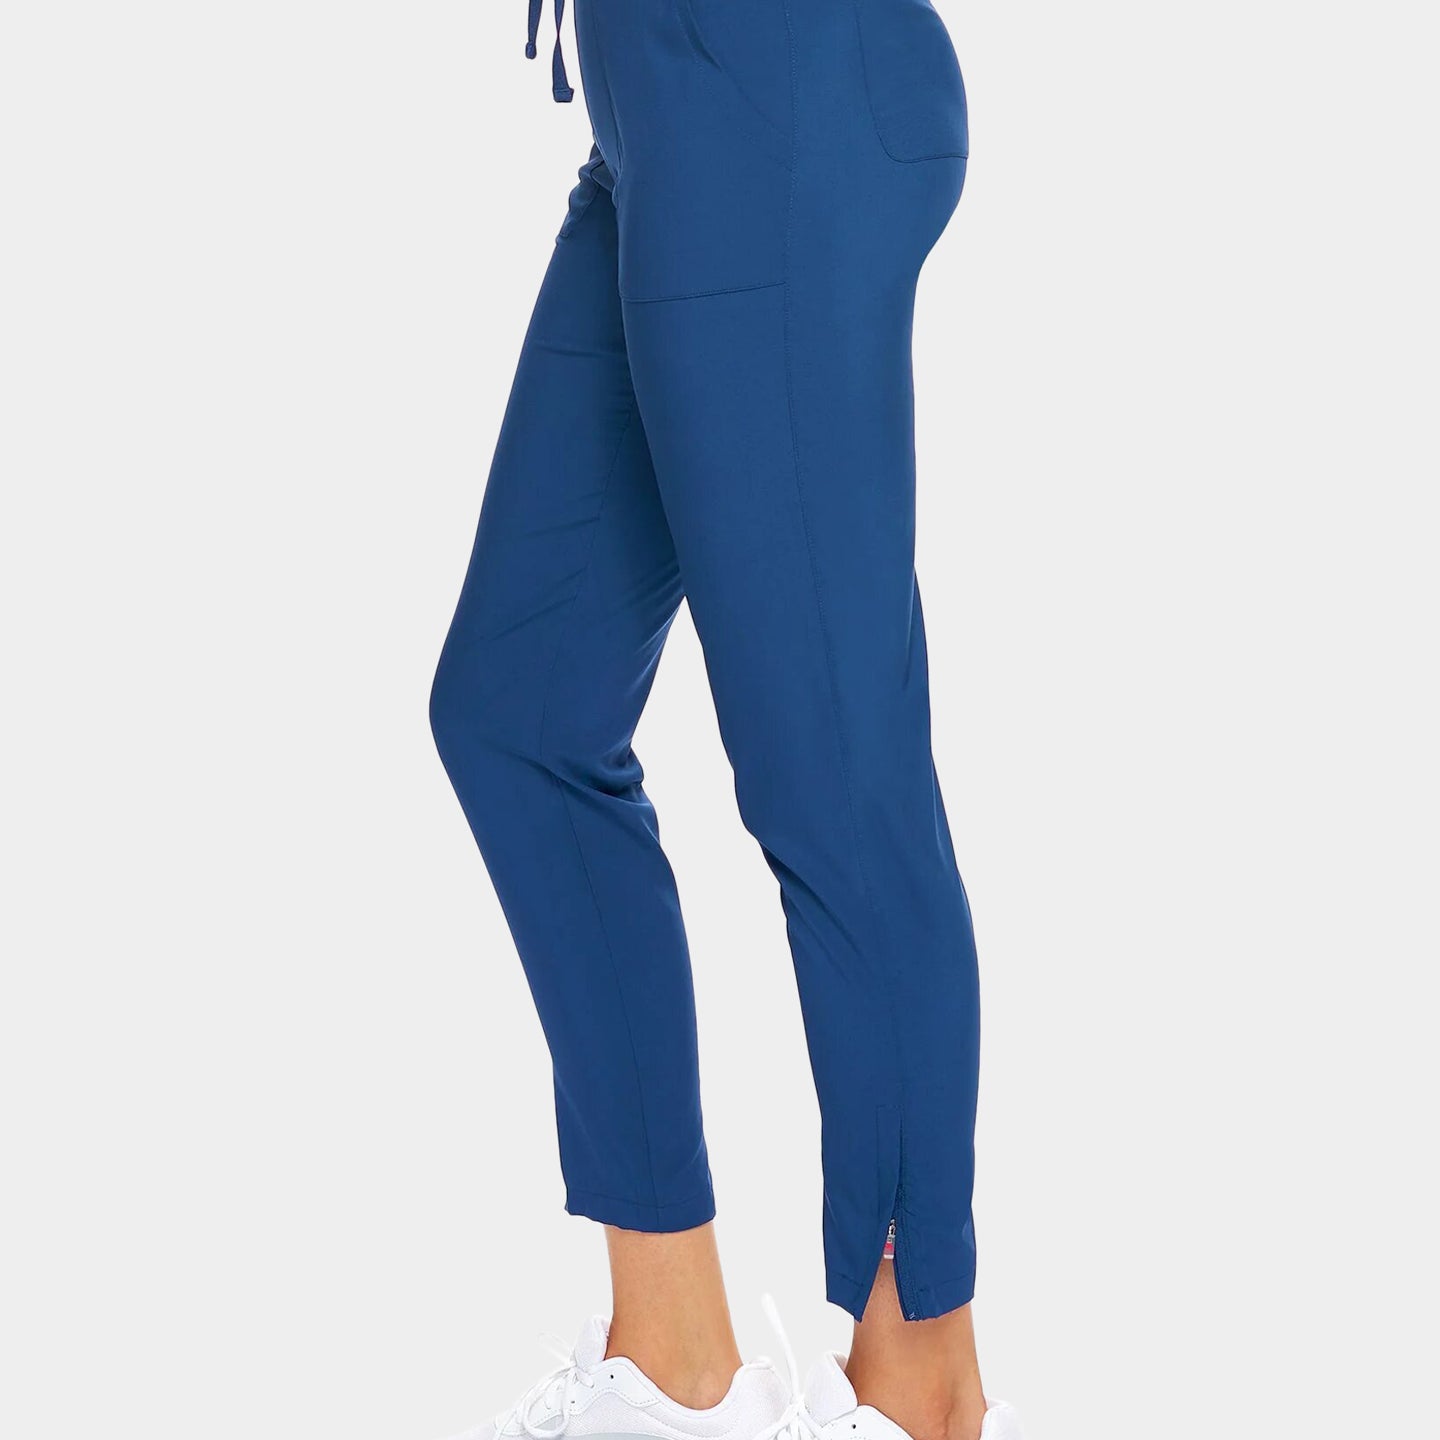 Expert Brand Women's Peformance City Pants, XL, Navy A1